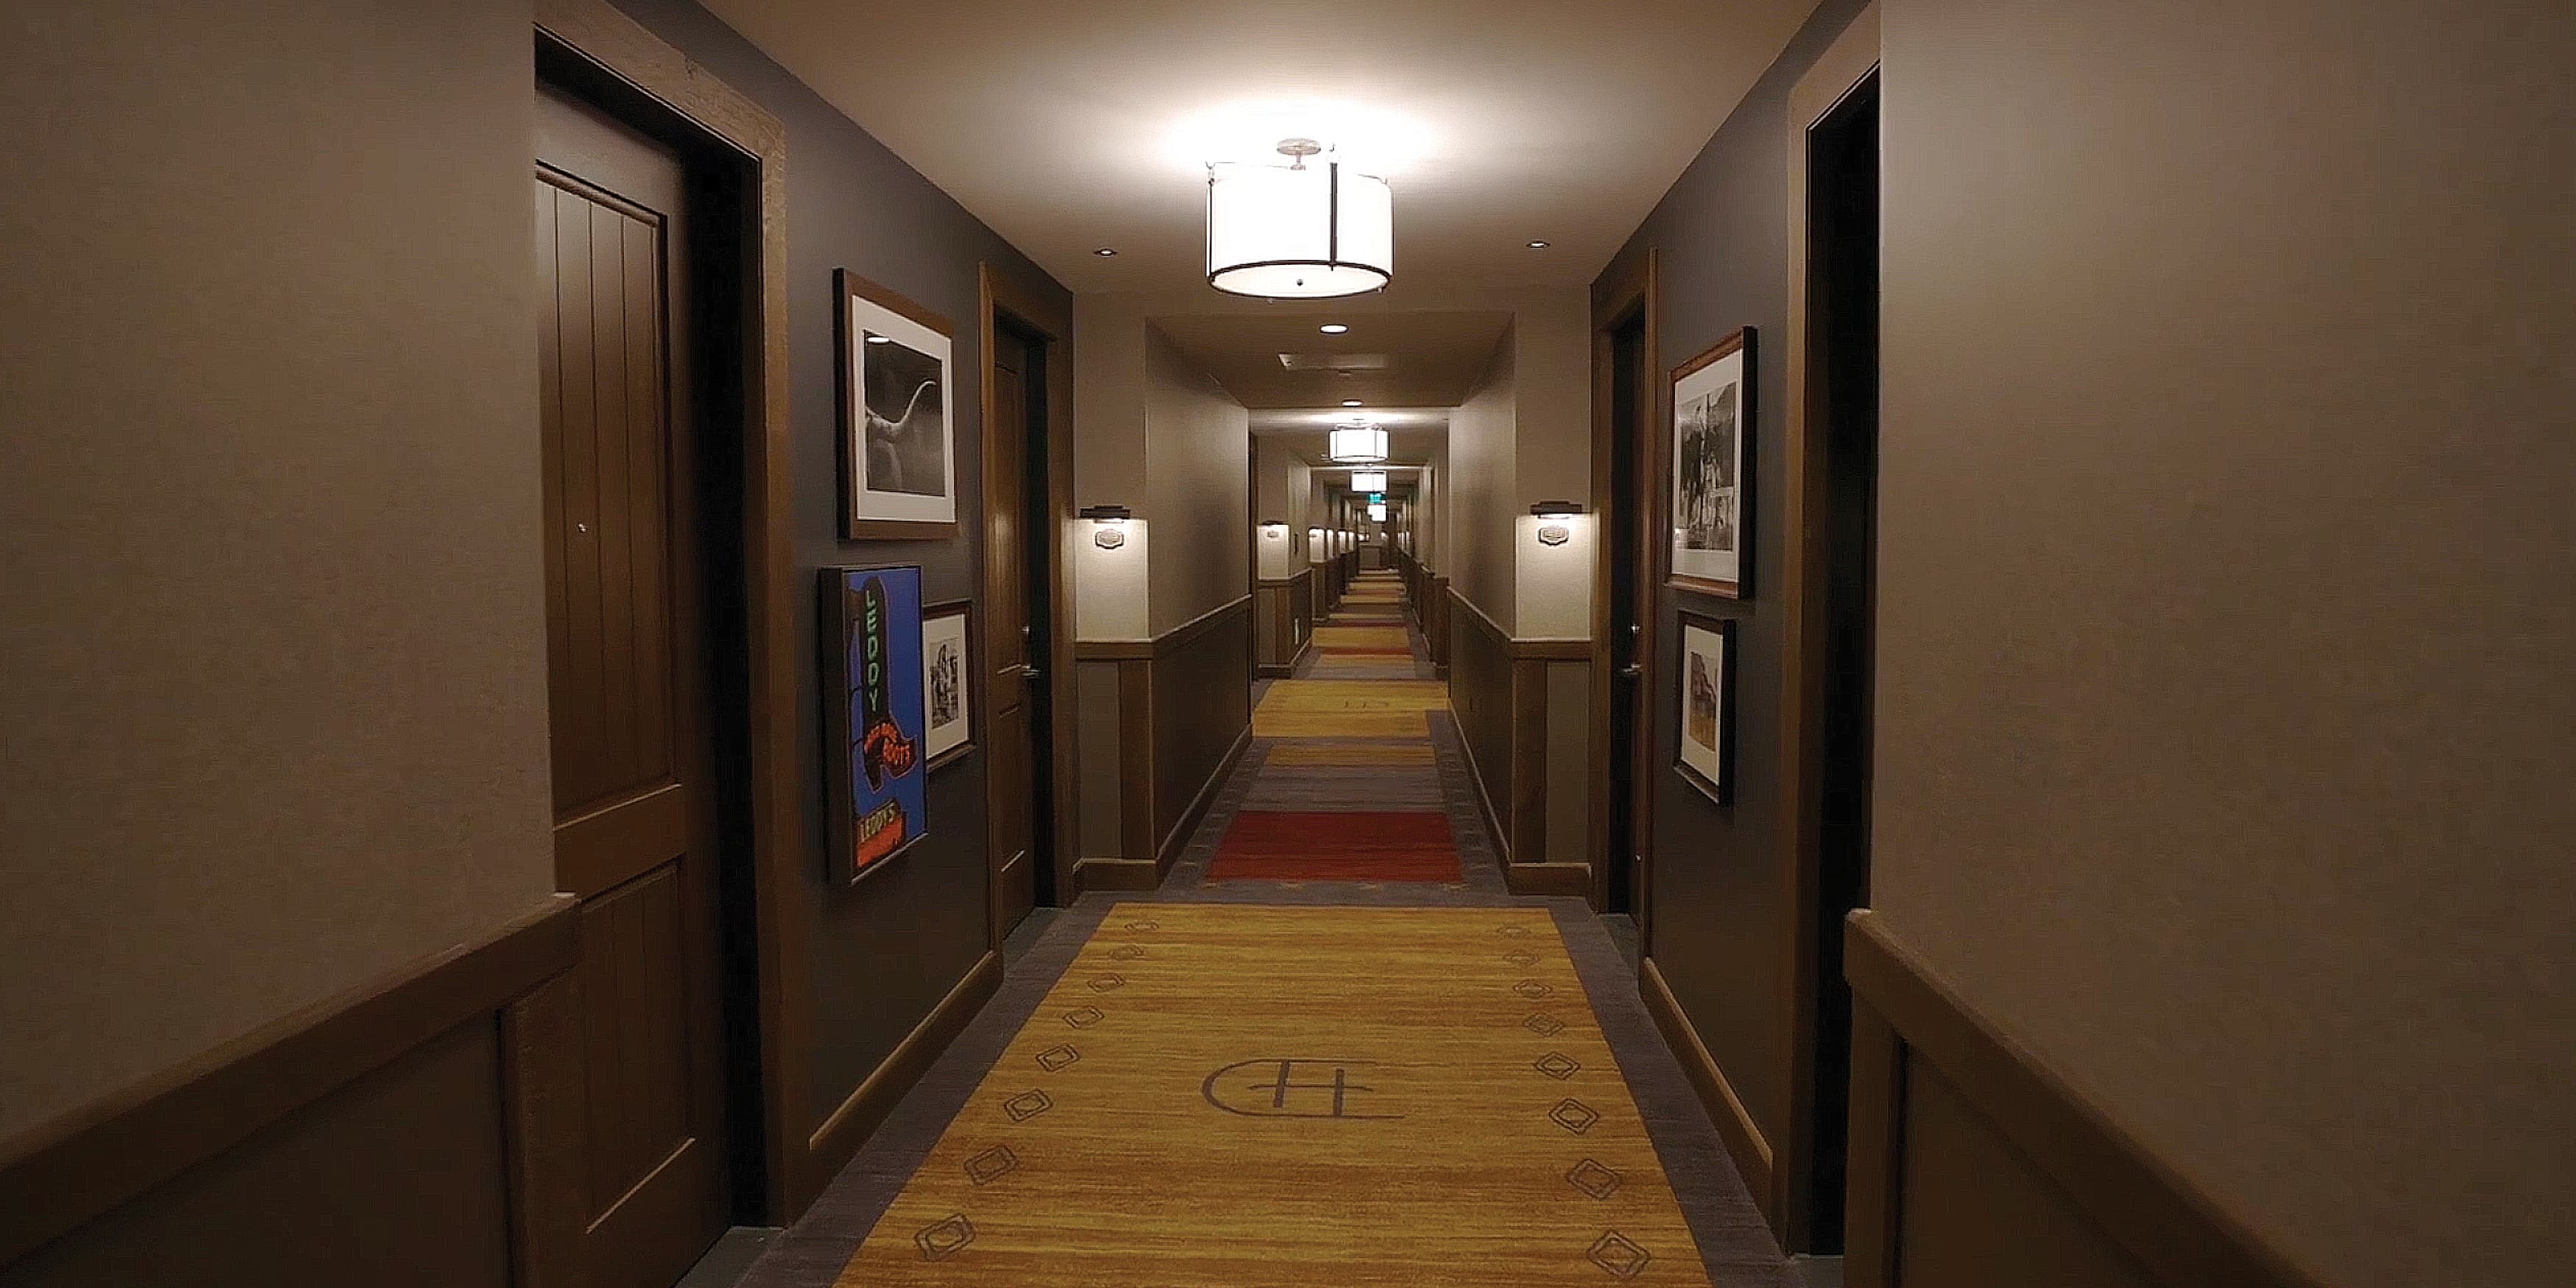 Interior hotel hallway room plaques. 